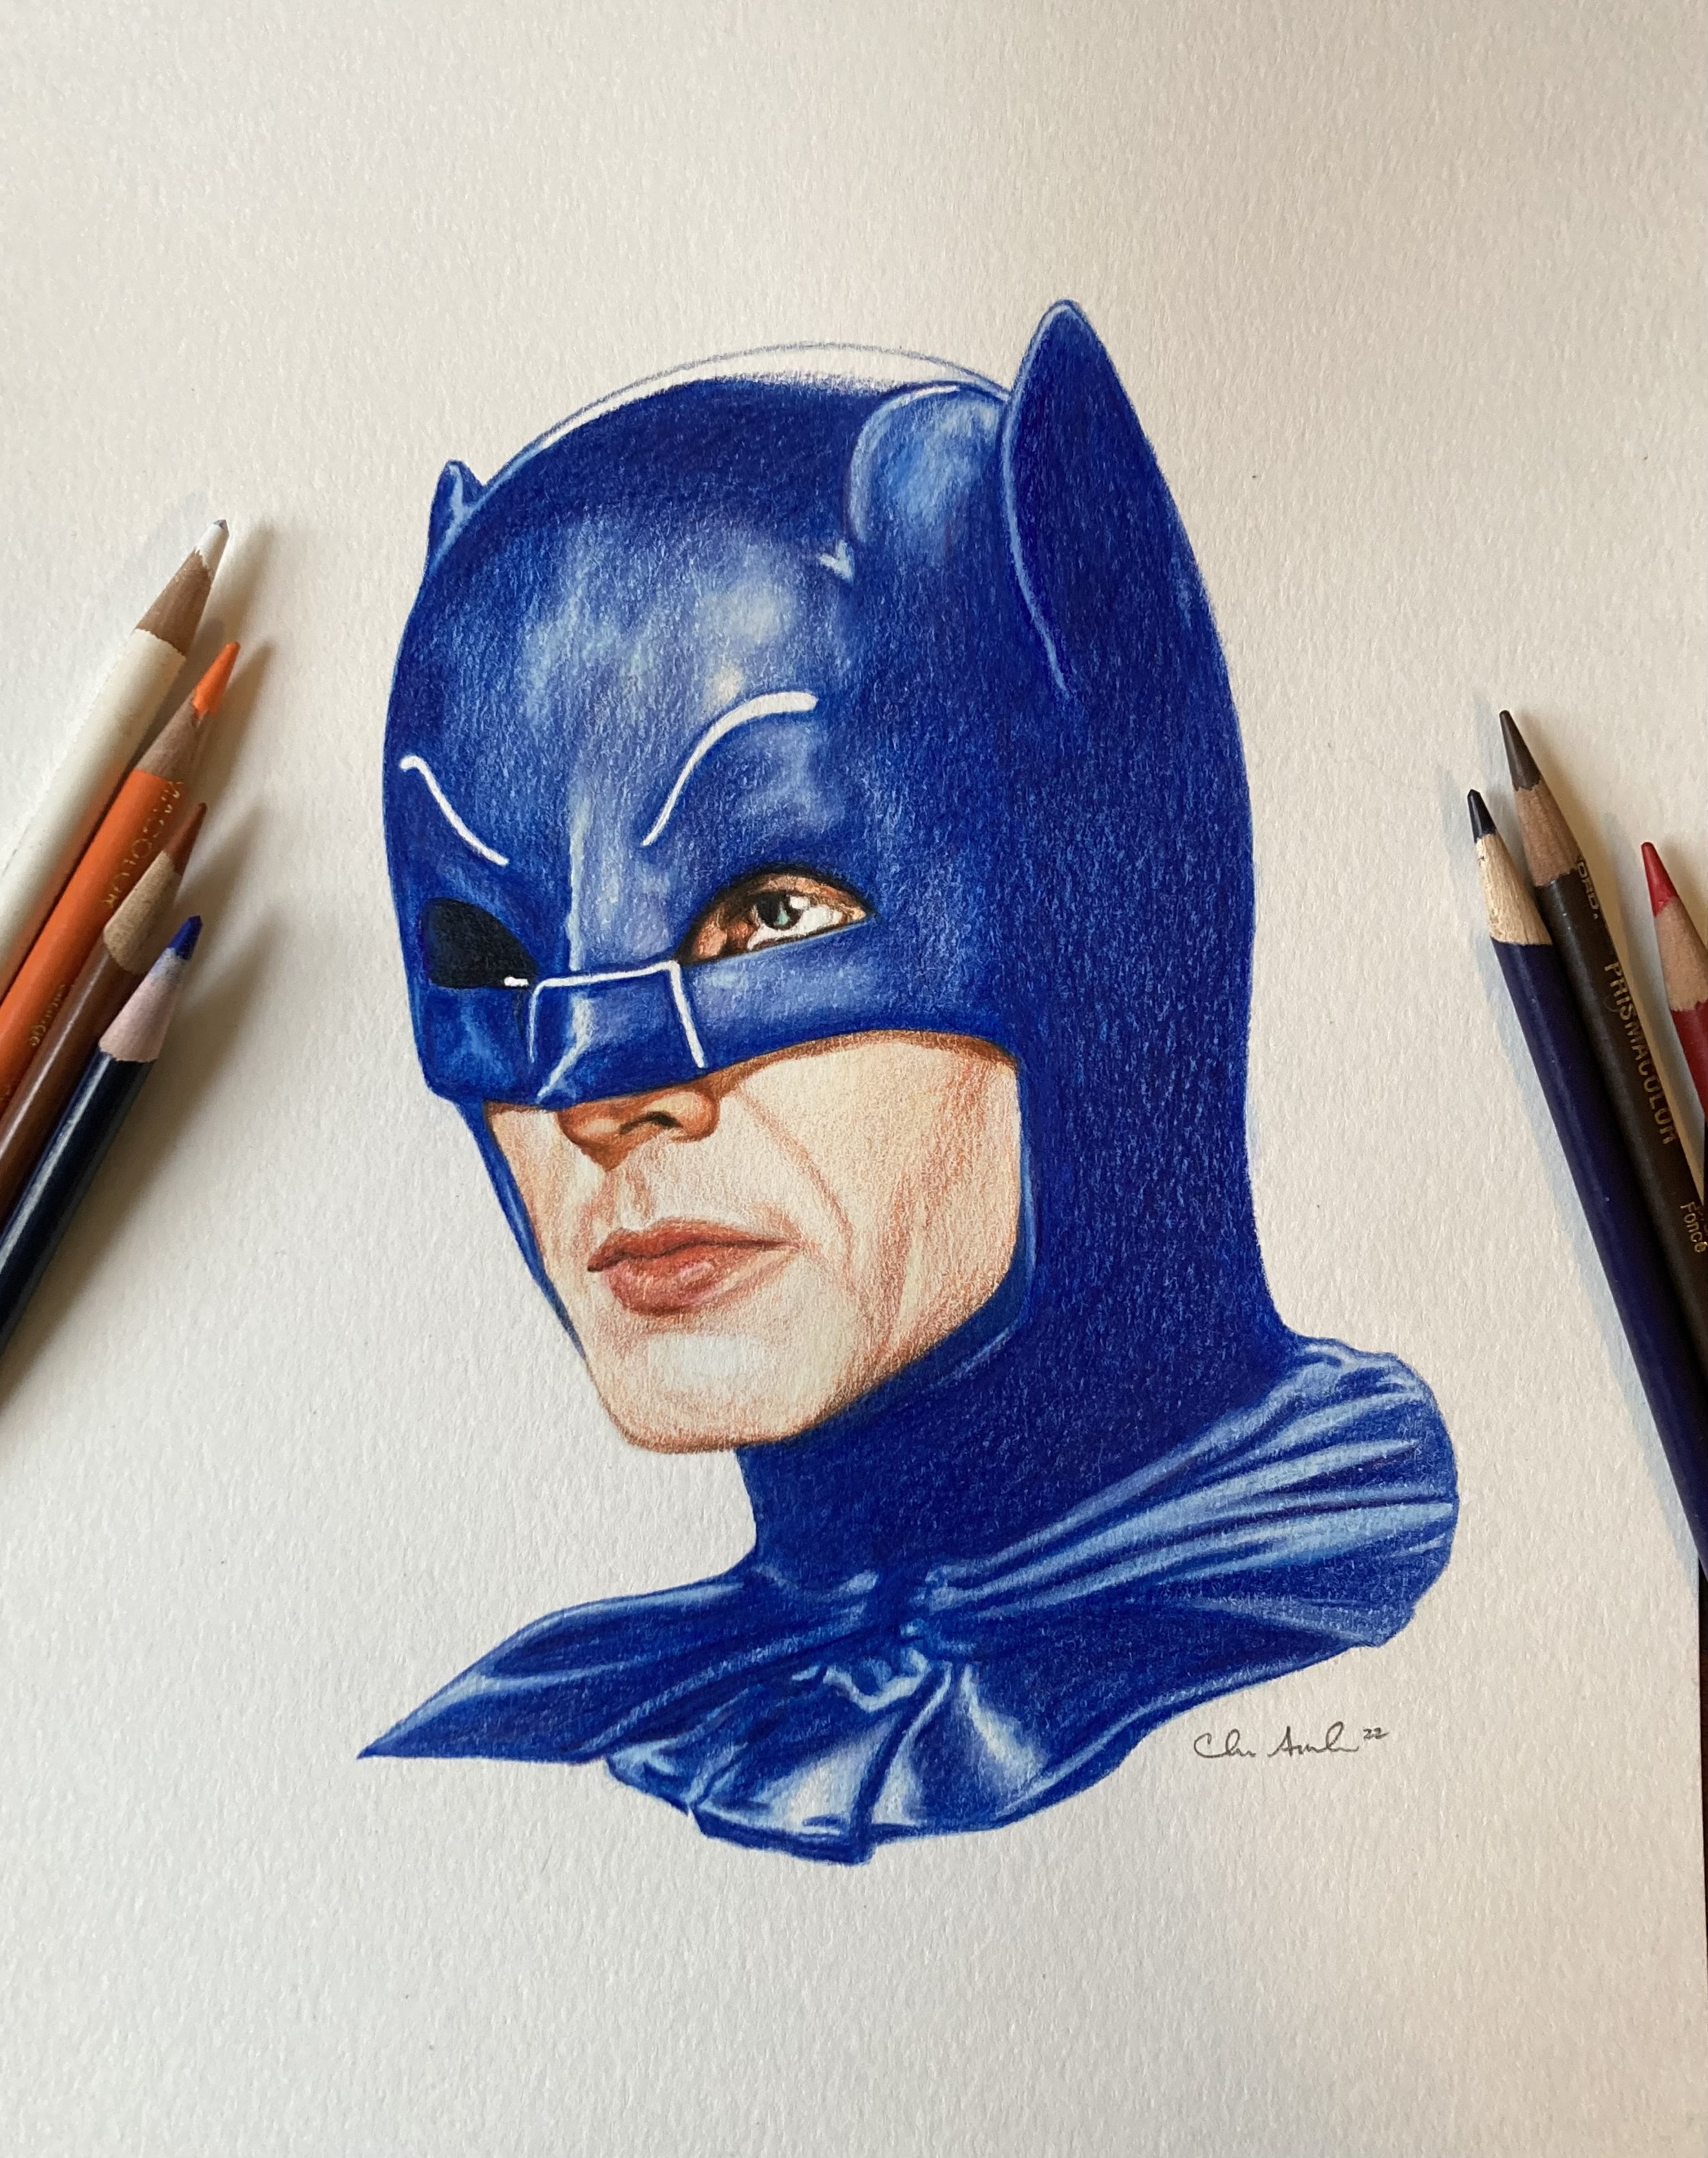 Adam West as The Batman! by NorthsideComics45223 on DeviantArt